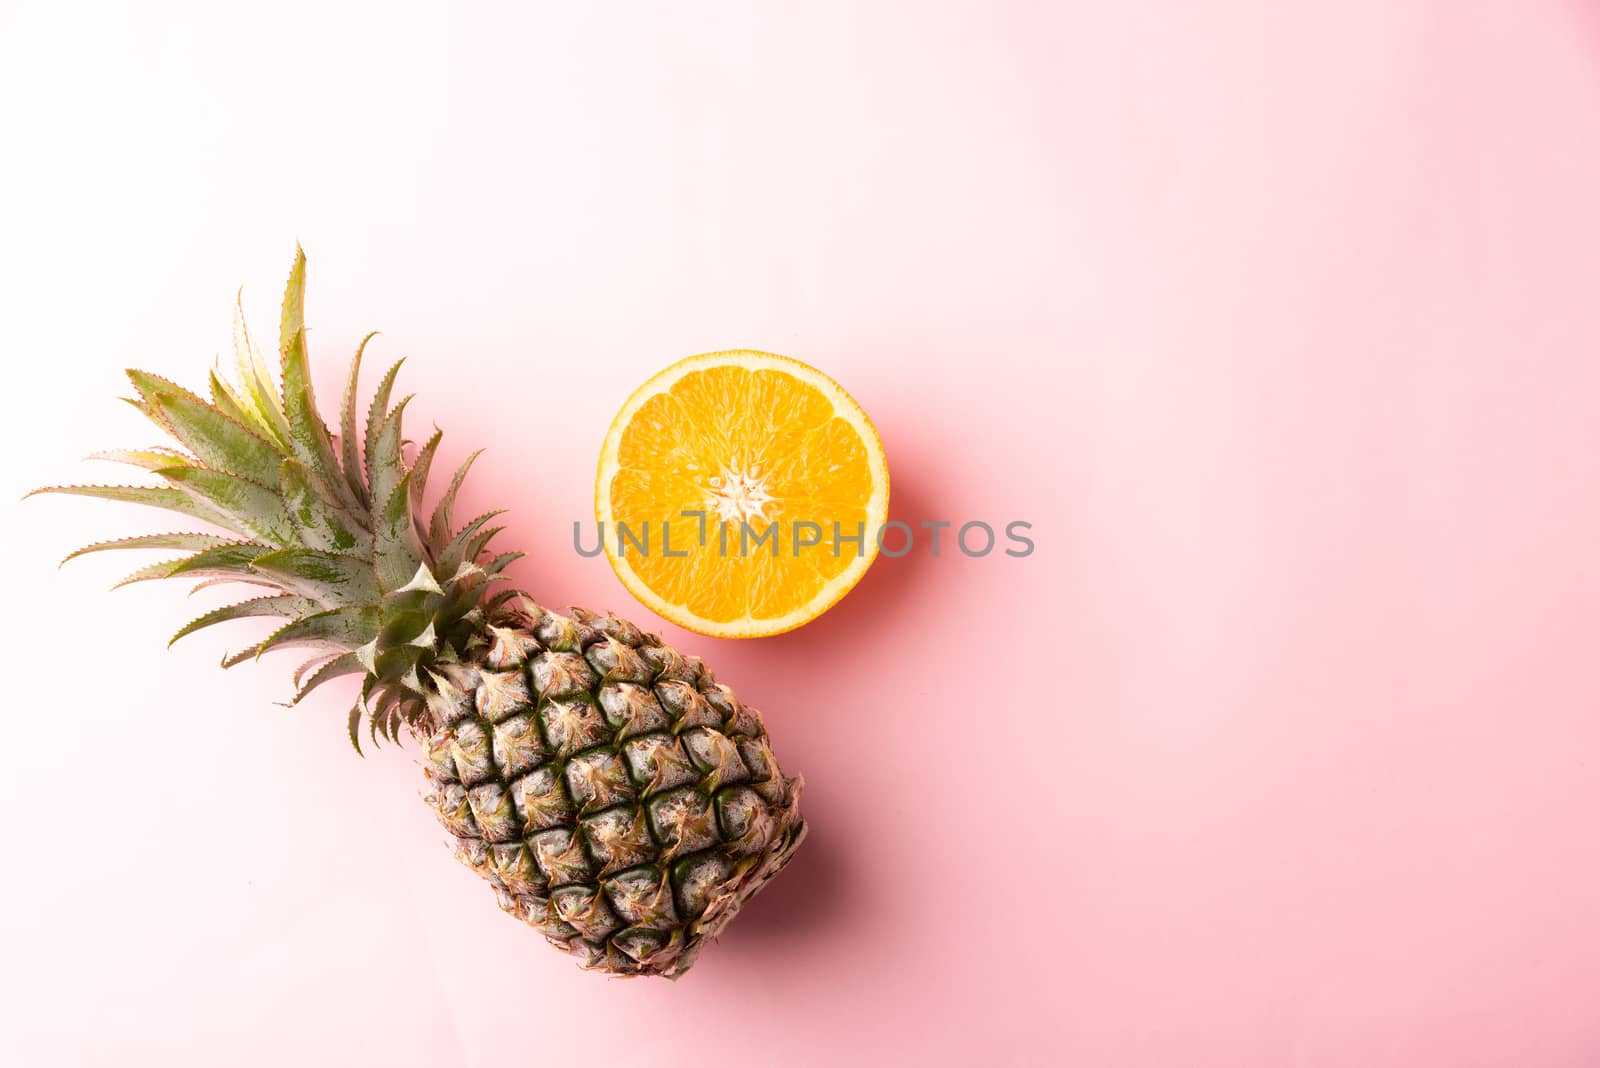 ripe pineapple and orange fruit by Sorapop